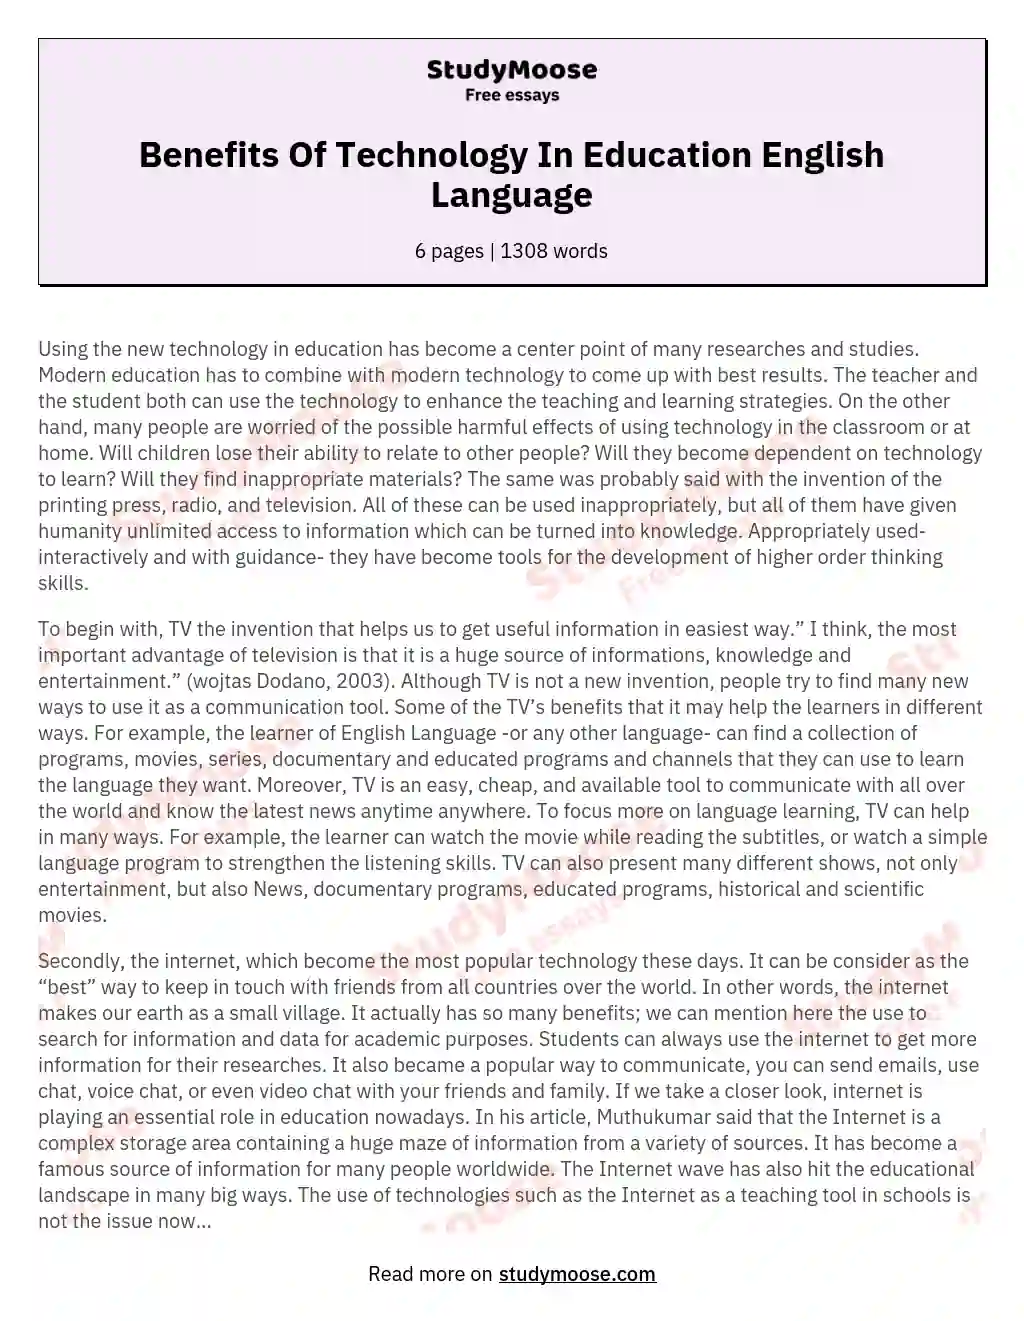 Benefits Of Technology In Education English Language